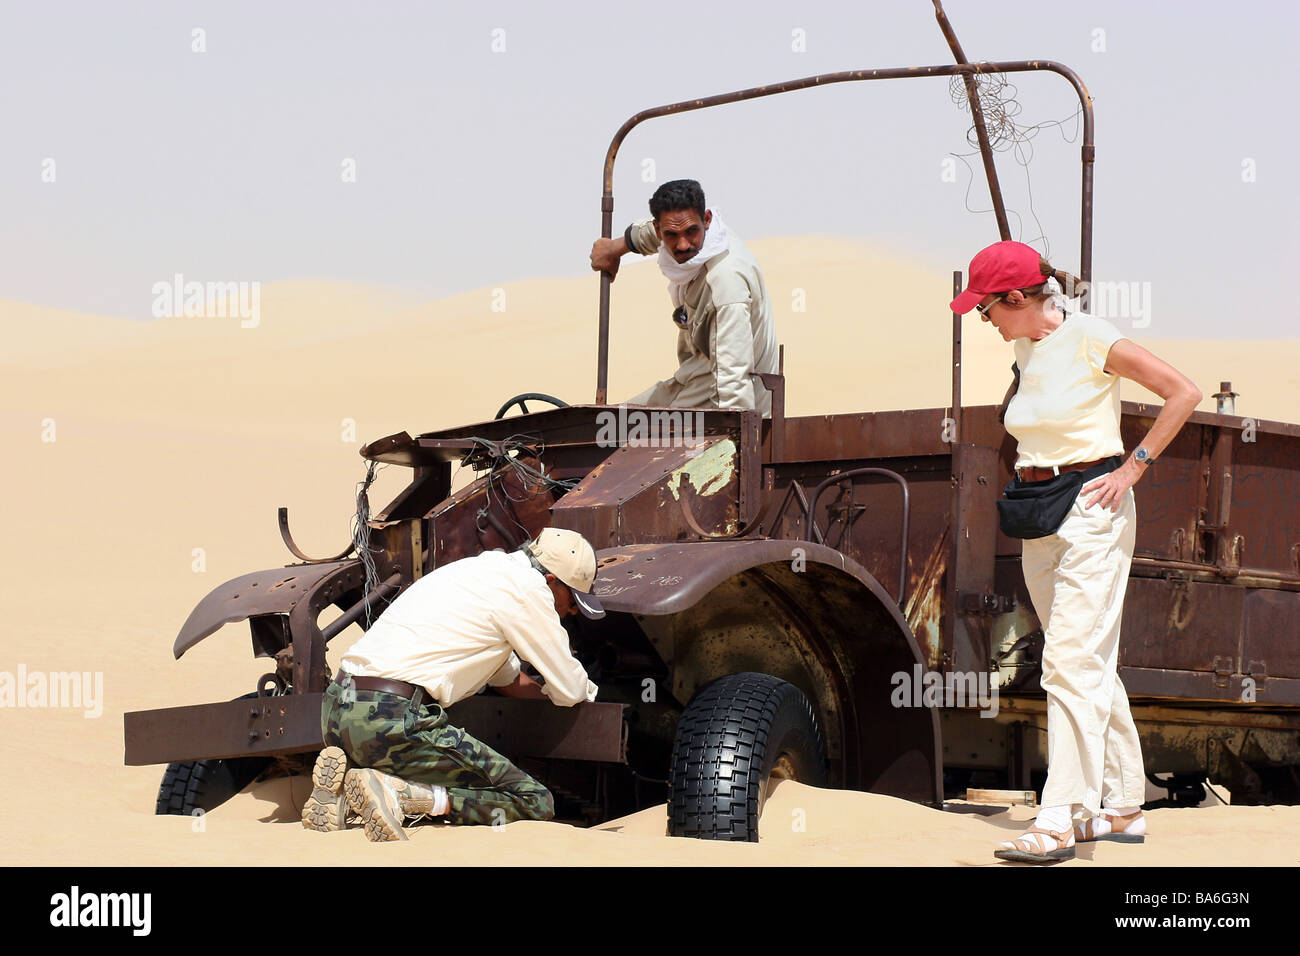 Egipto Libysche gran desierto de arena de mar-car-naufragio turistas sin modelos dunas de arena alquiler de vehículo libere erg reliquia 2 naufragio roto. Foto de stock